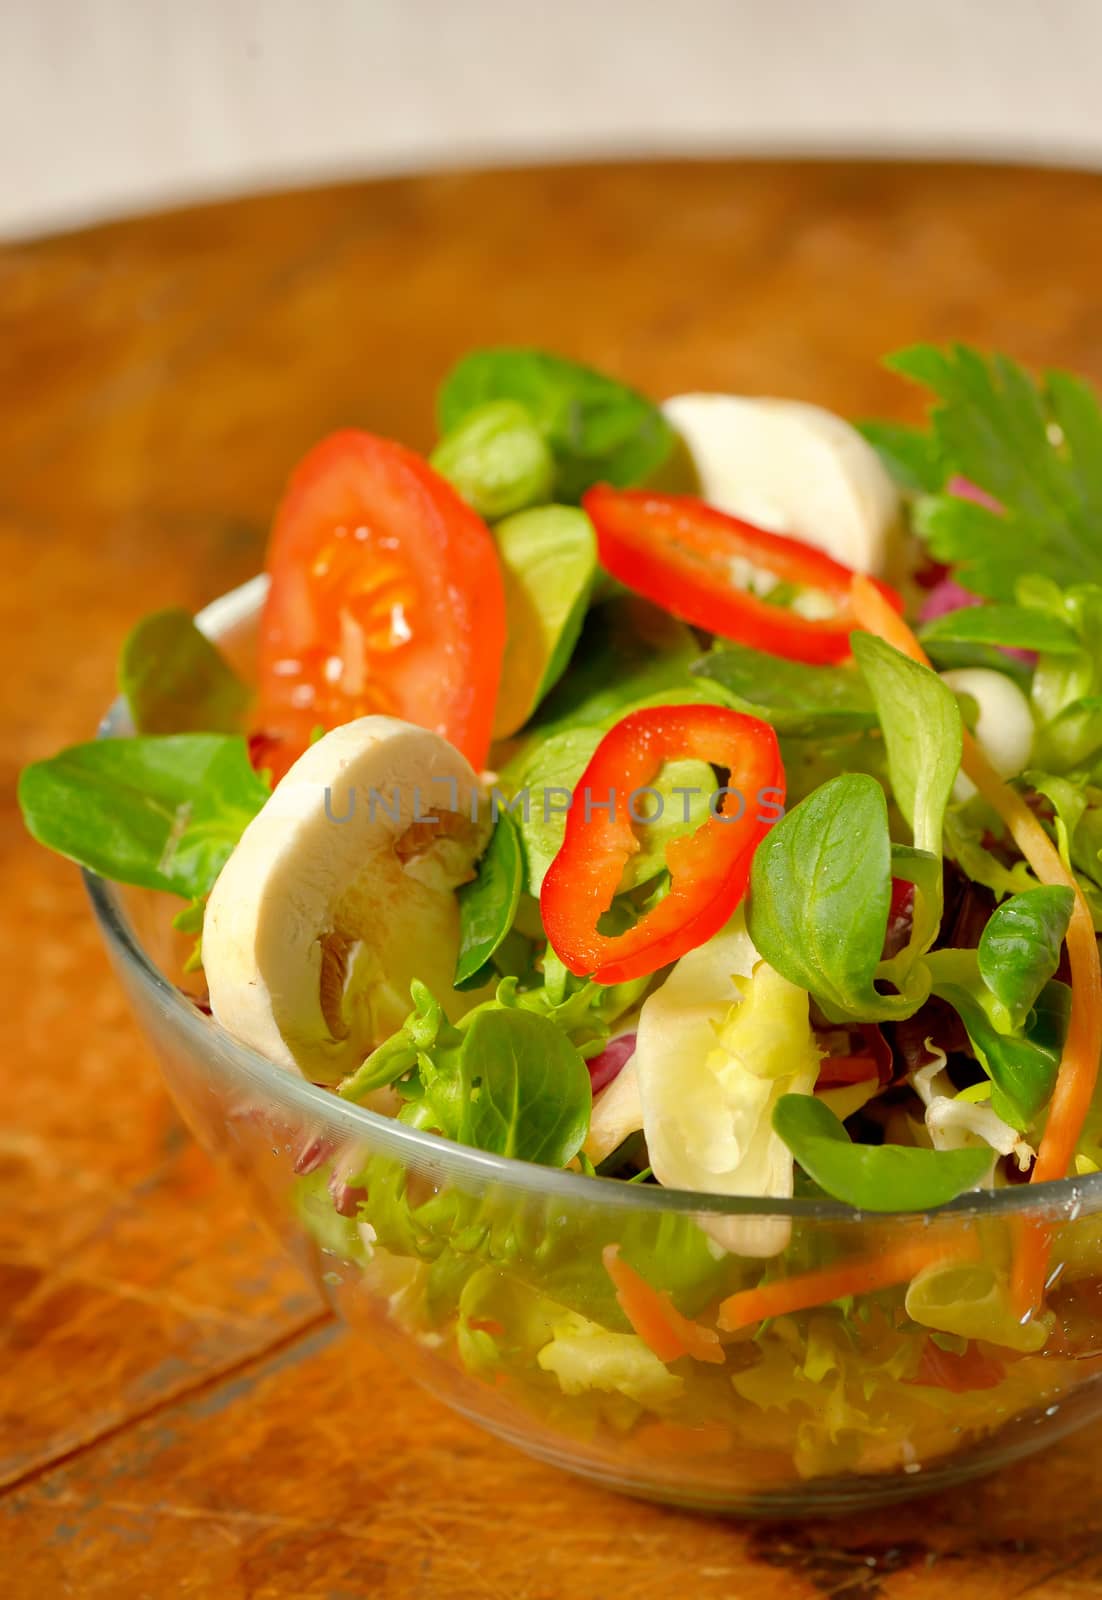 Tasty fresh salad on wooden table